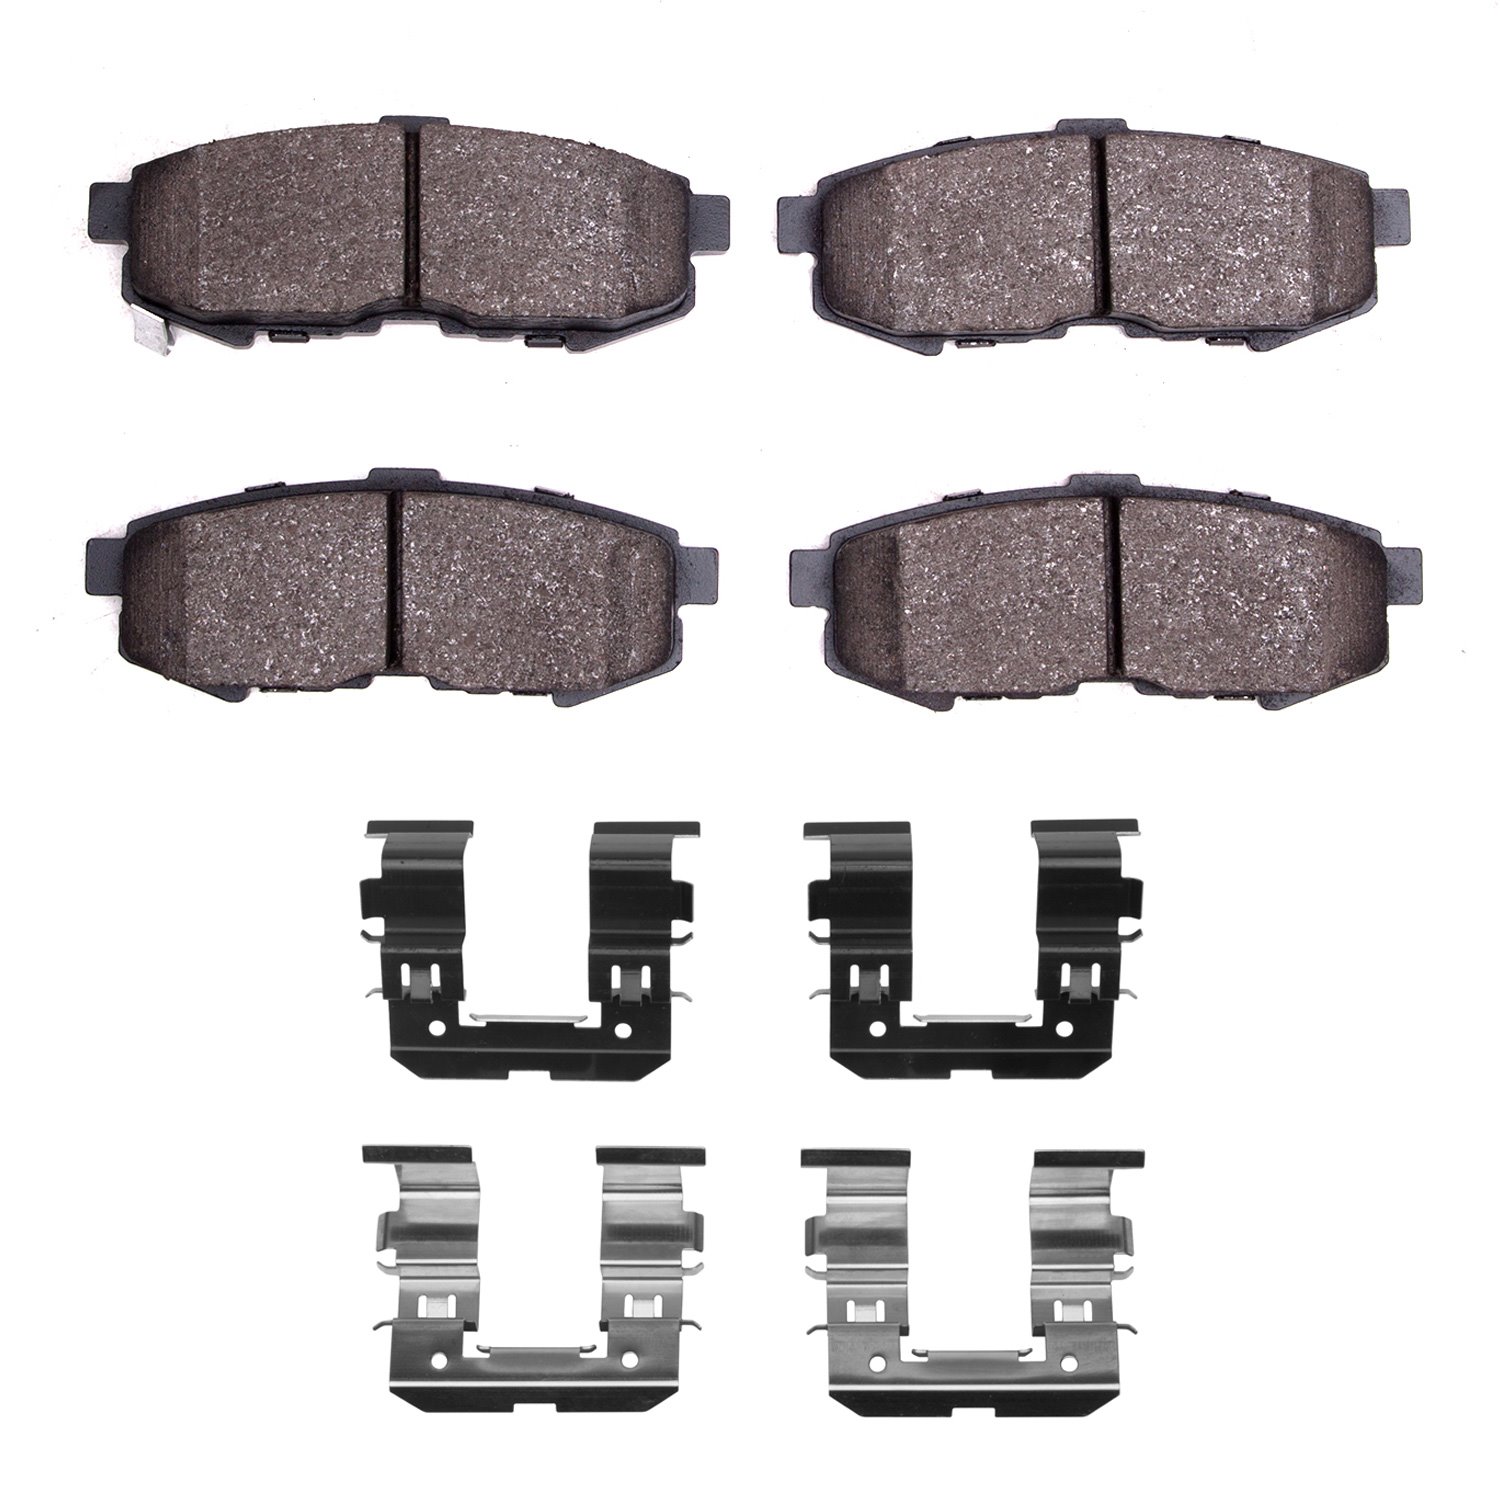 1310-1073-01 3000-Series Ceramic Brake Pads & Hardware Kit, 2004-2006 Ford/Lincoln/Mercury/Mazda, Position: Rear